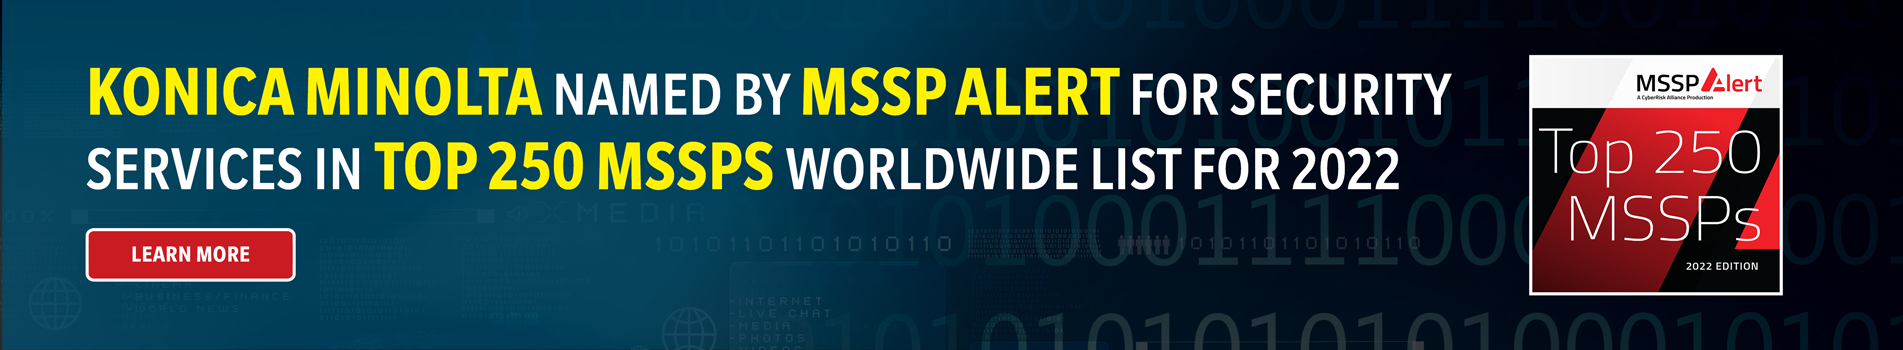 Konica Minolta Konica Minolta Named to MSSP Alerts Top 250 MSSPs List for 2022